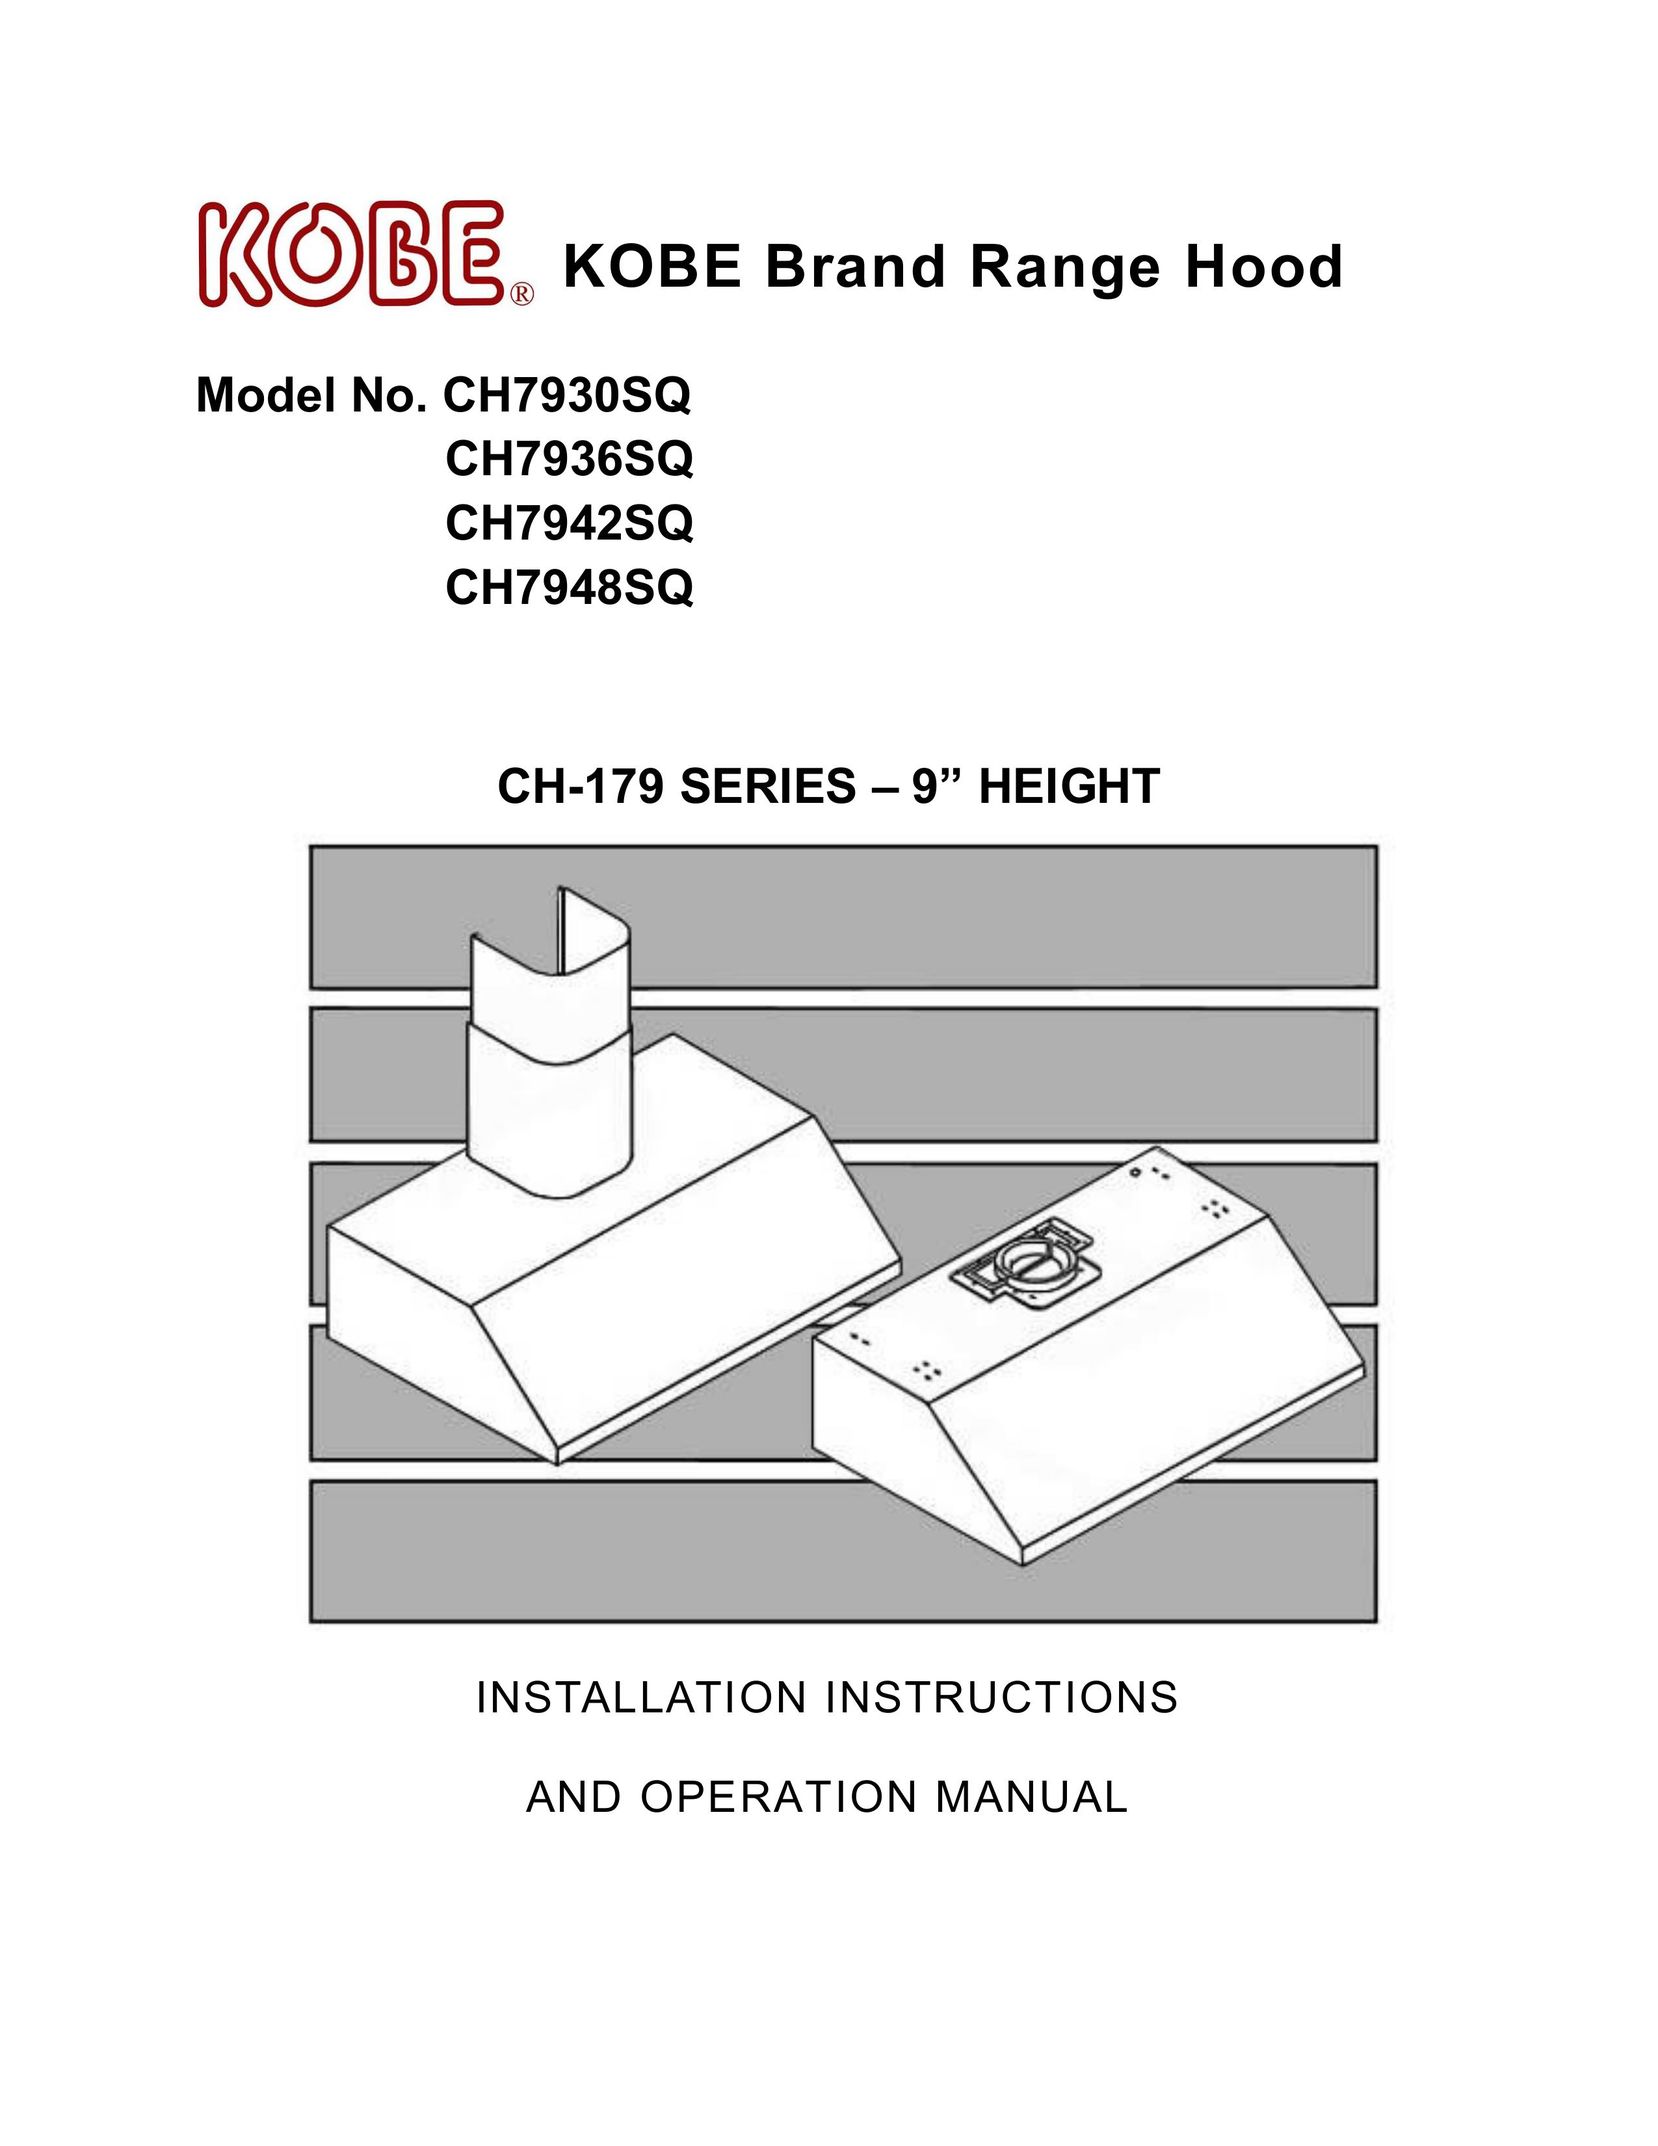 Kobe Range Hoods CH7942SQ Range User Manual